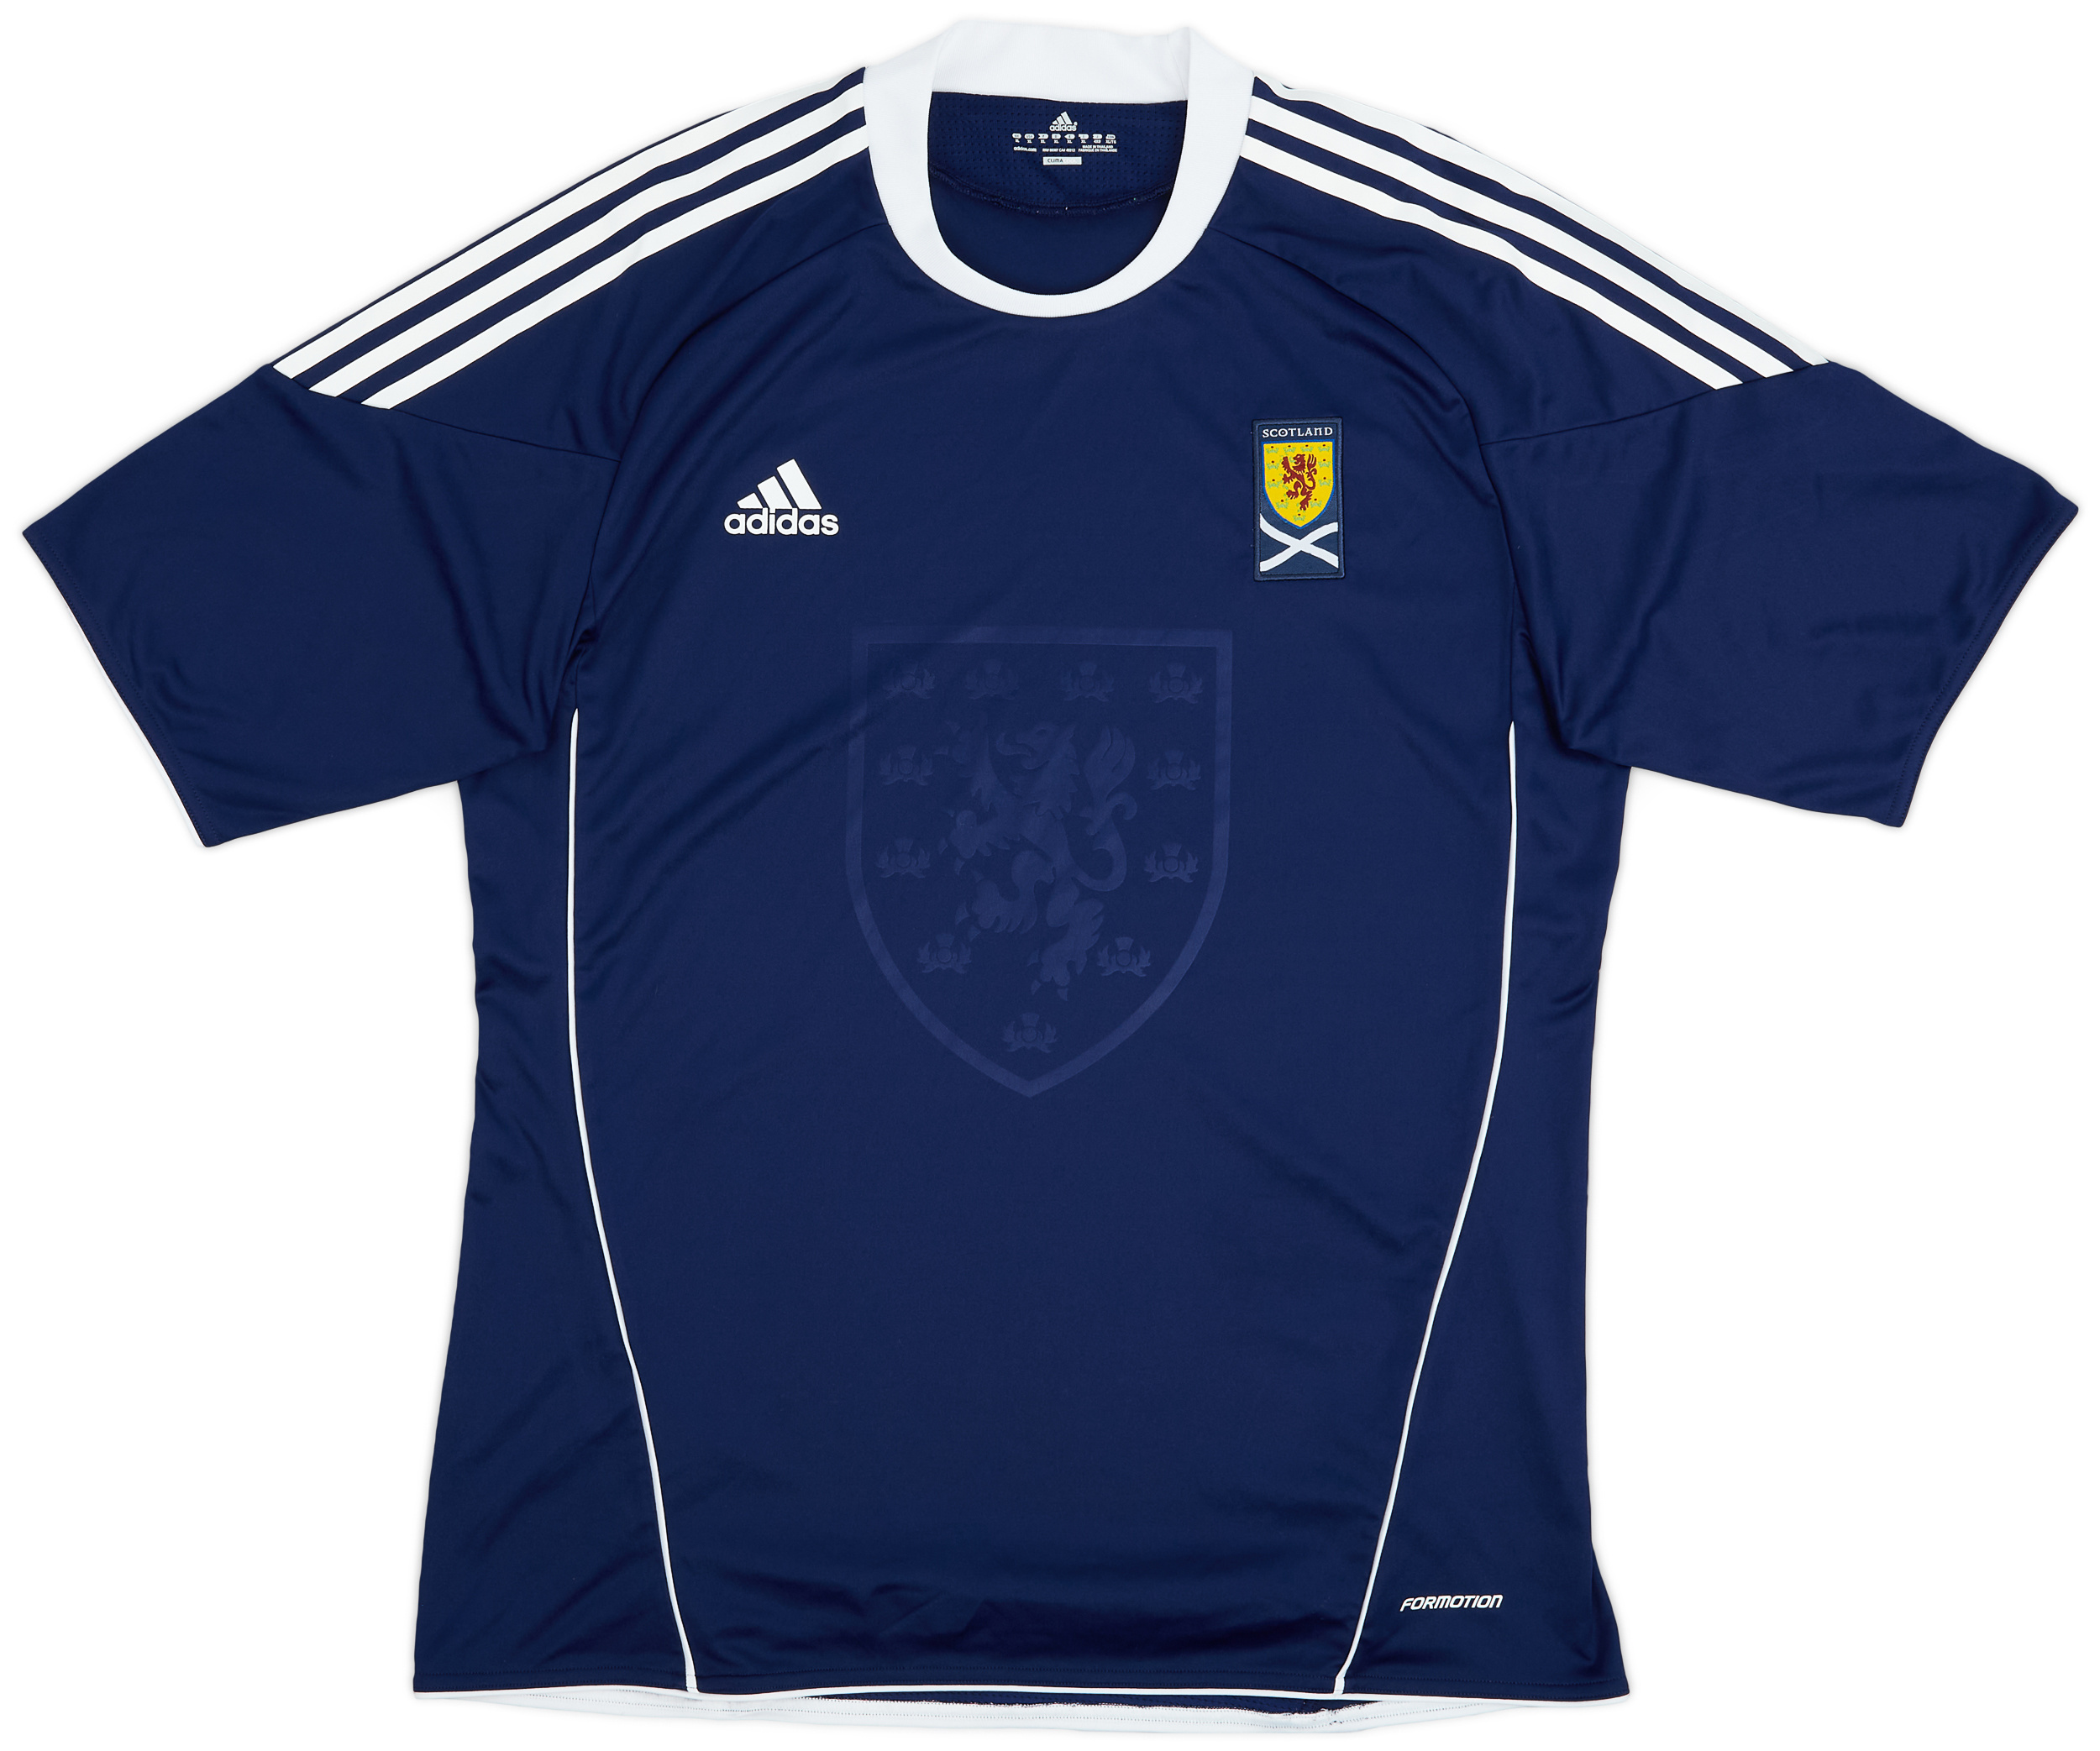 2010-11 Scotland Player Issue Home Shirt - 9/10 - ()